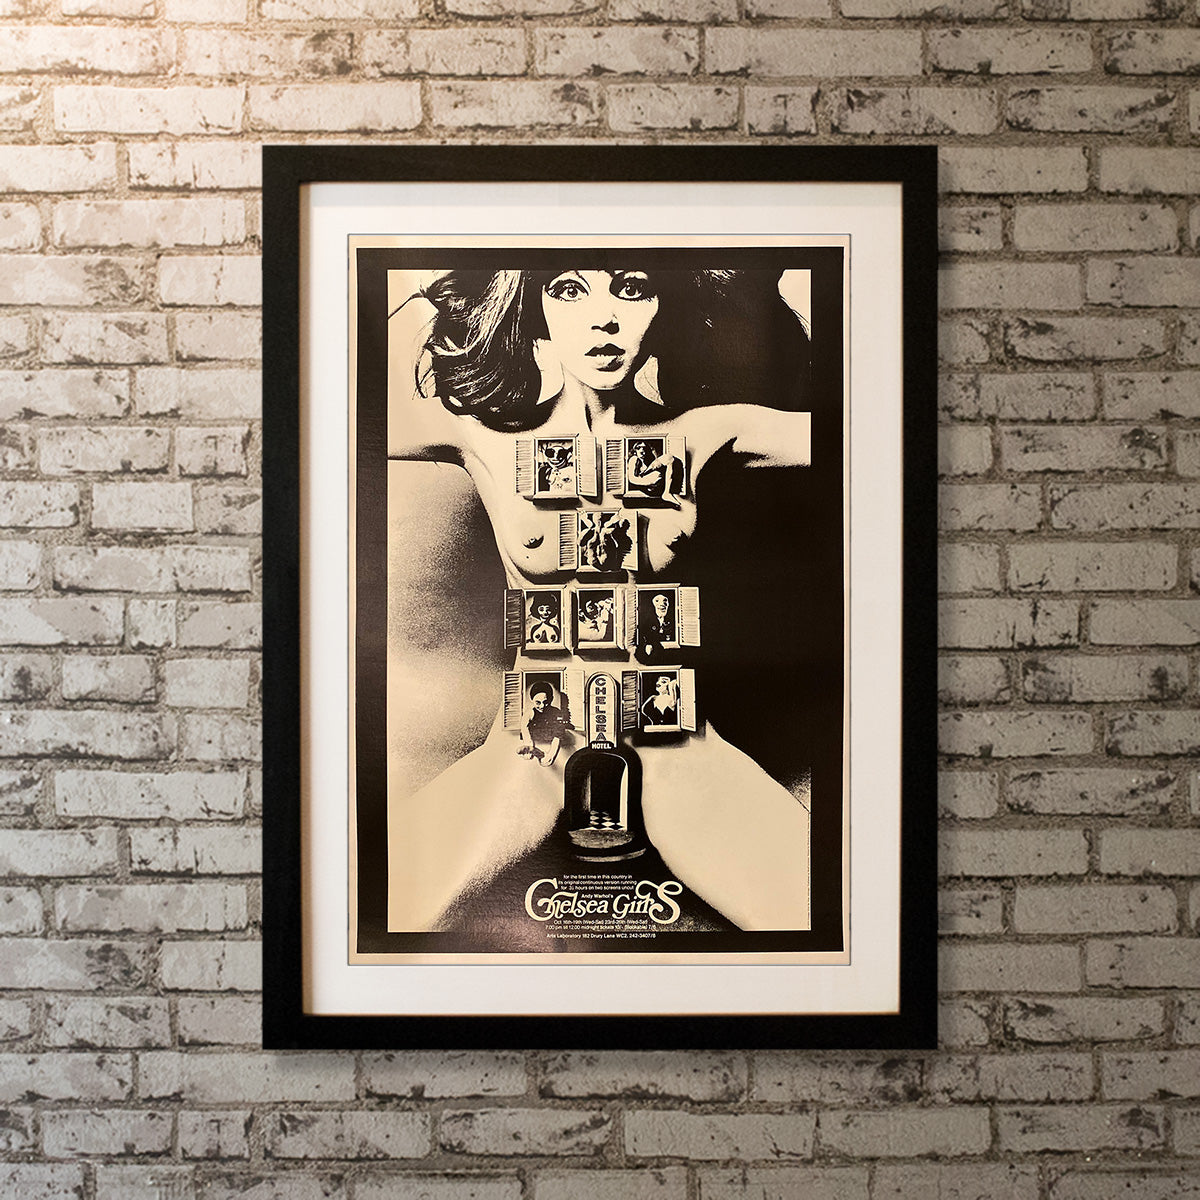 Original Movie Poster of Chelsea Girls (1966)